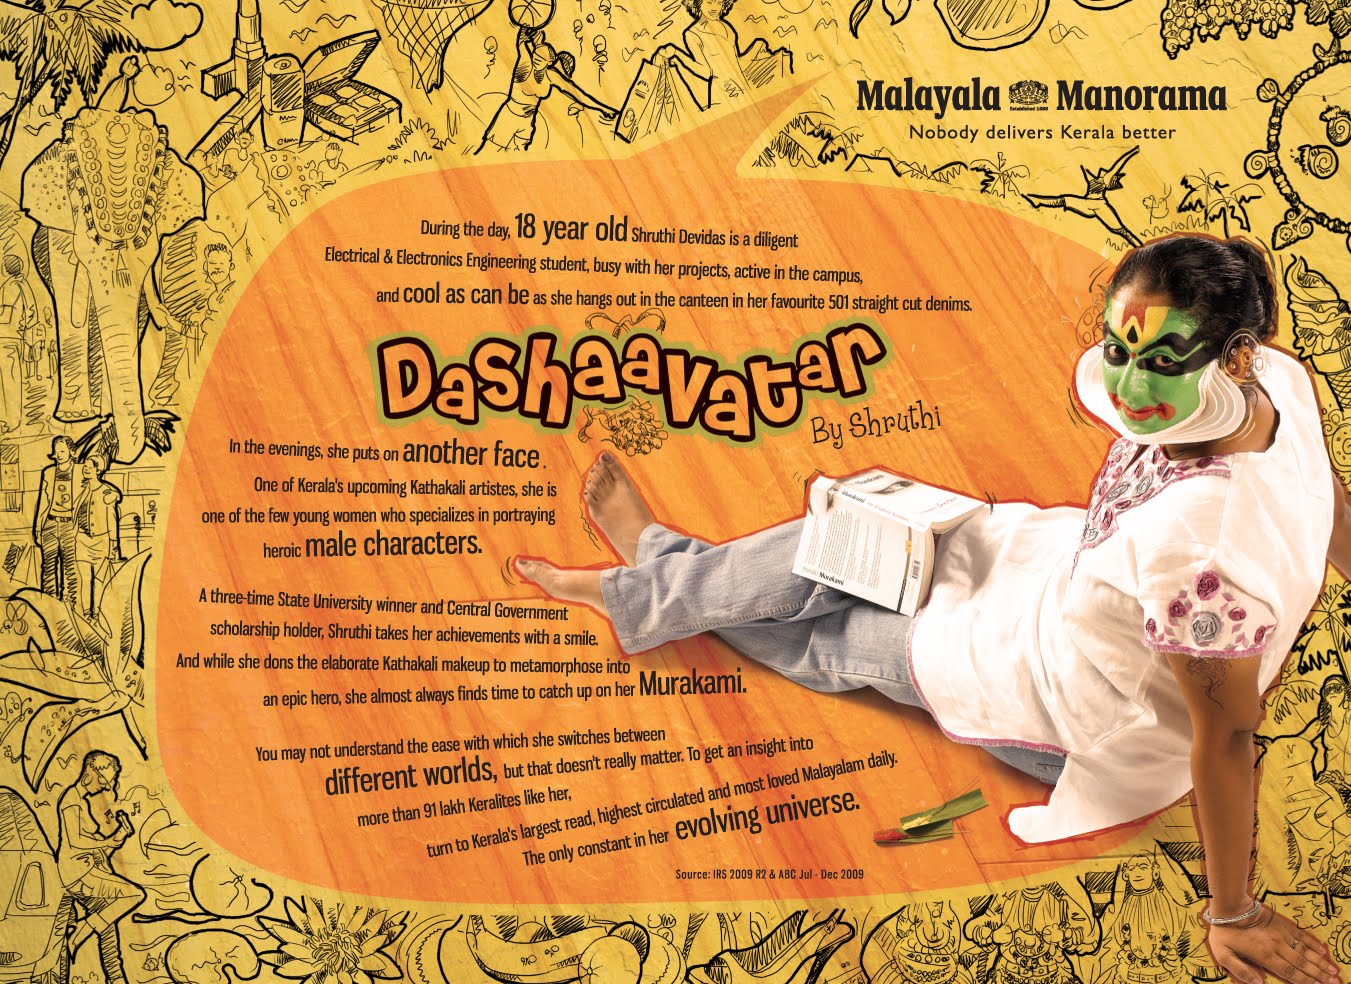 Malayala Manorama - Dashavatharam by Shruthi banner by Stark Communications Pvt Ltd